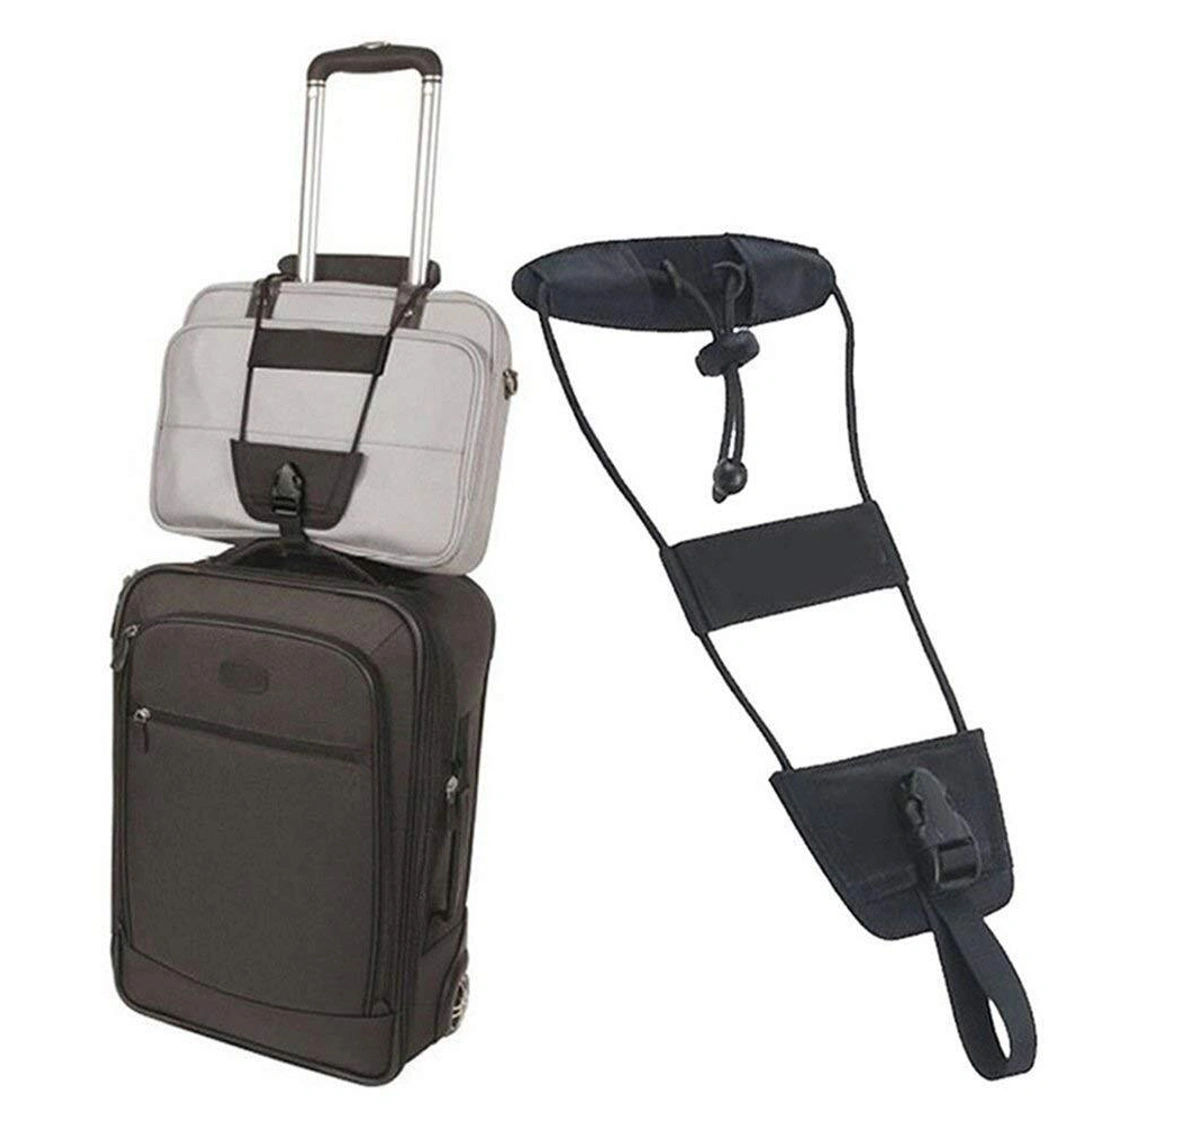 Adjustable Travel Luggage Straps